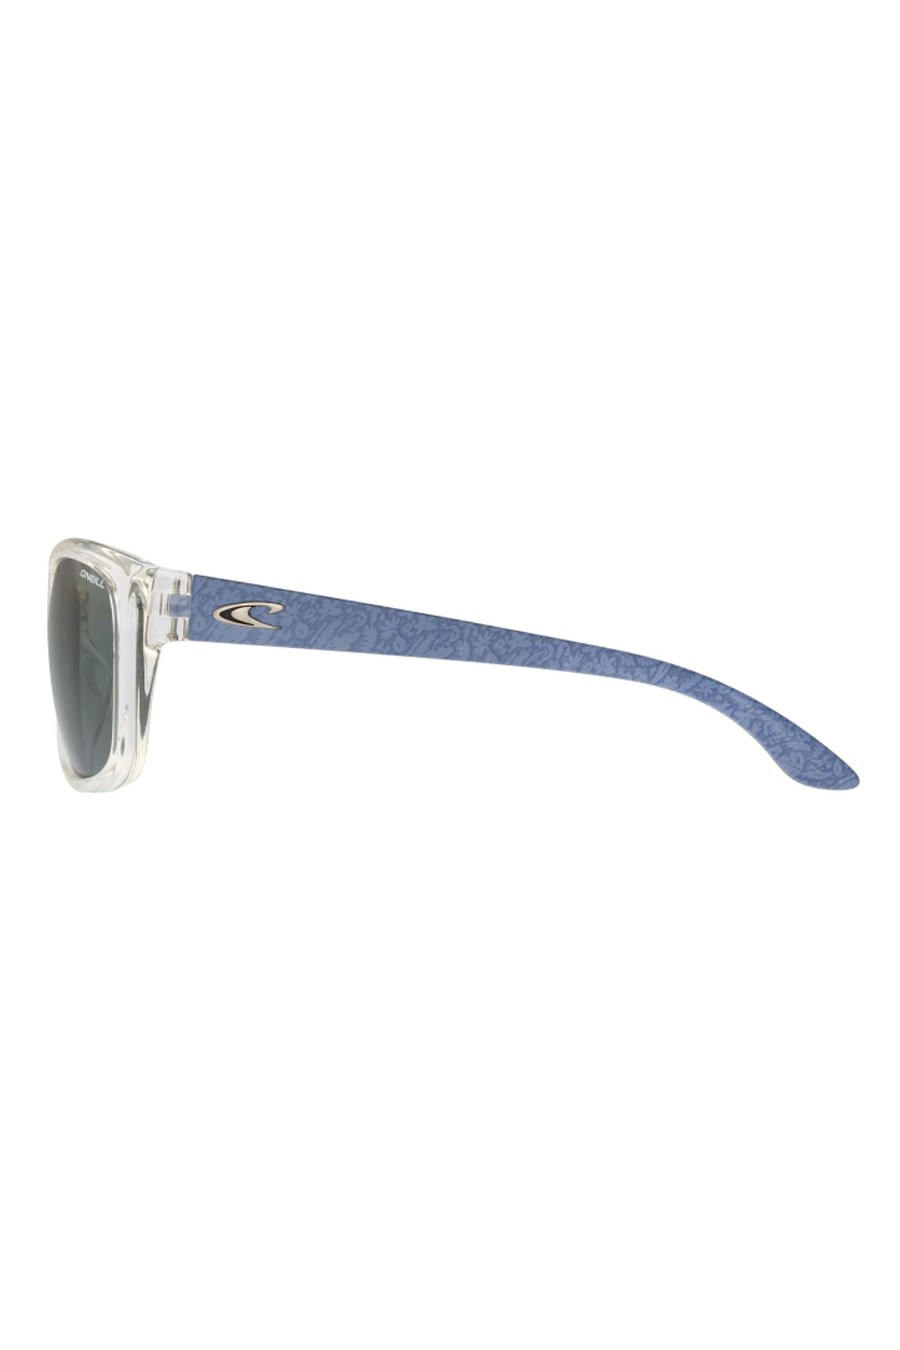 Sunglasses ONEILL ONS-9032-20-113P